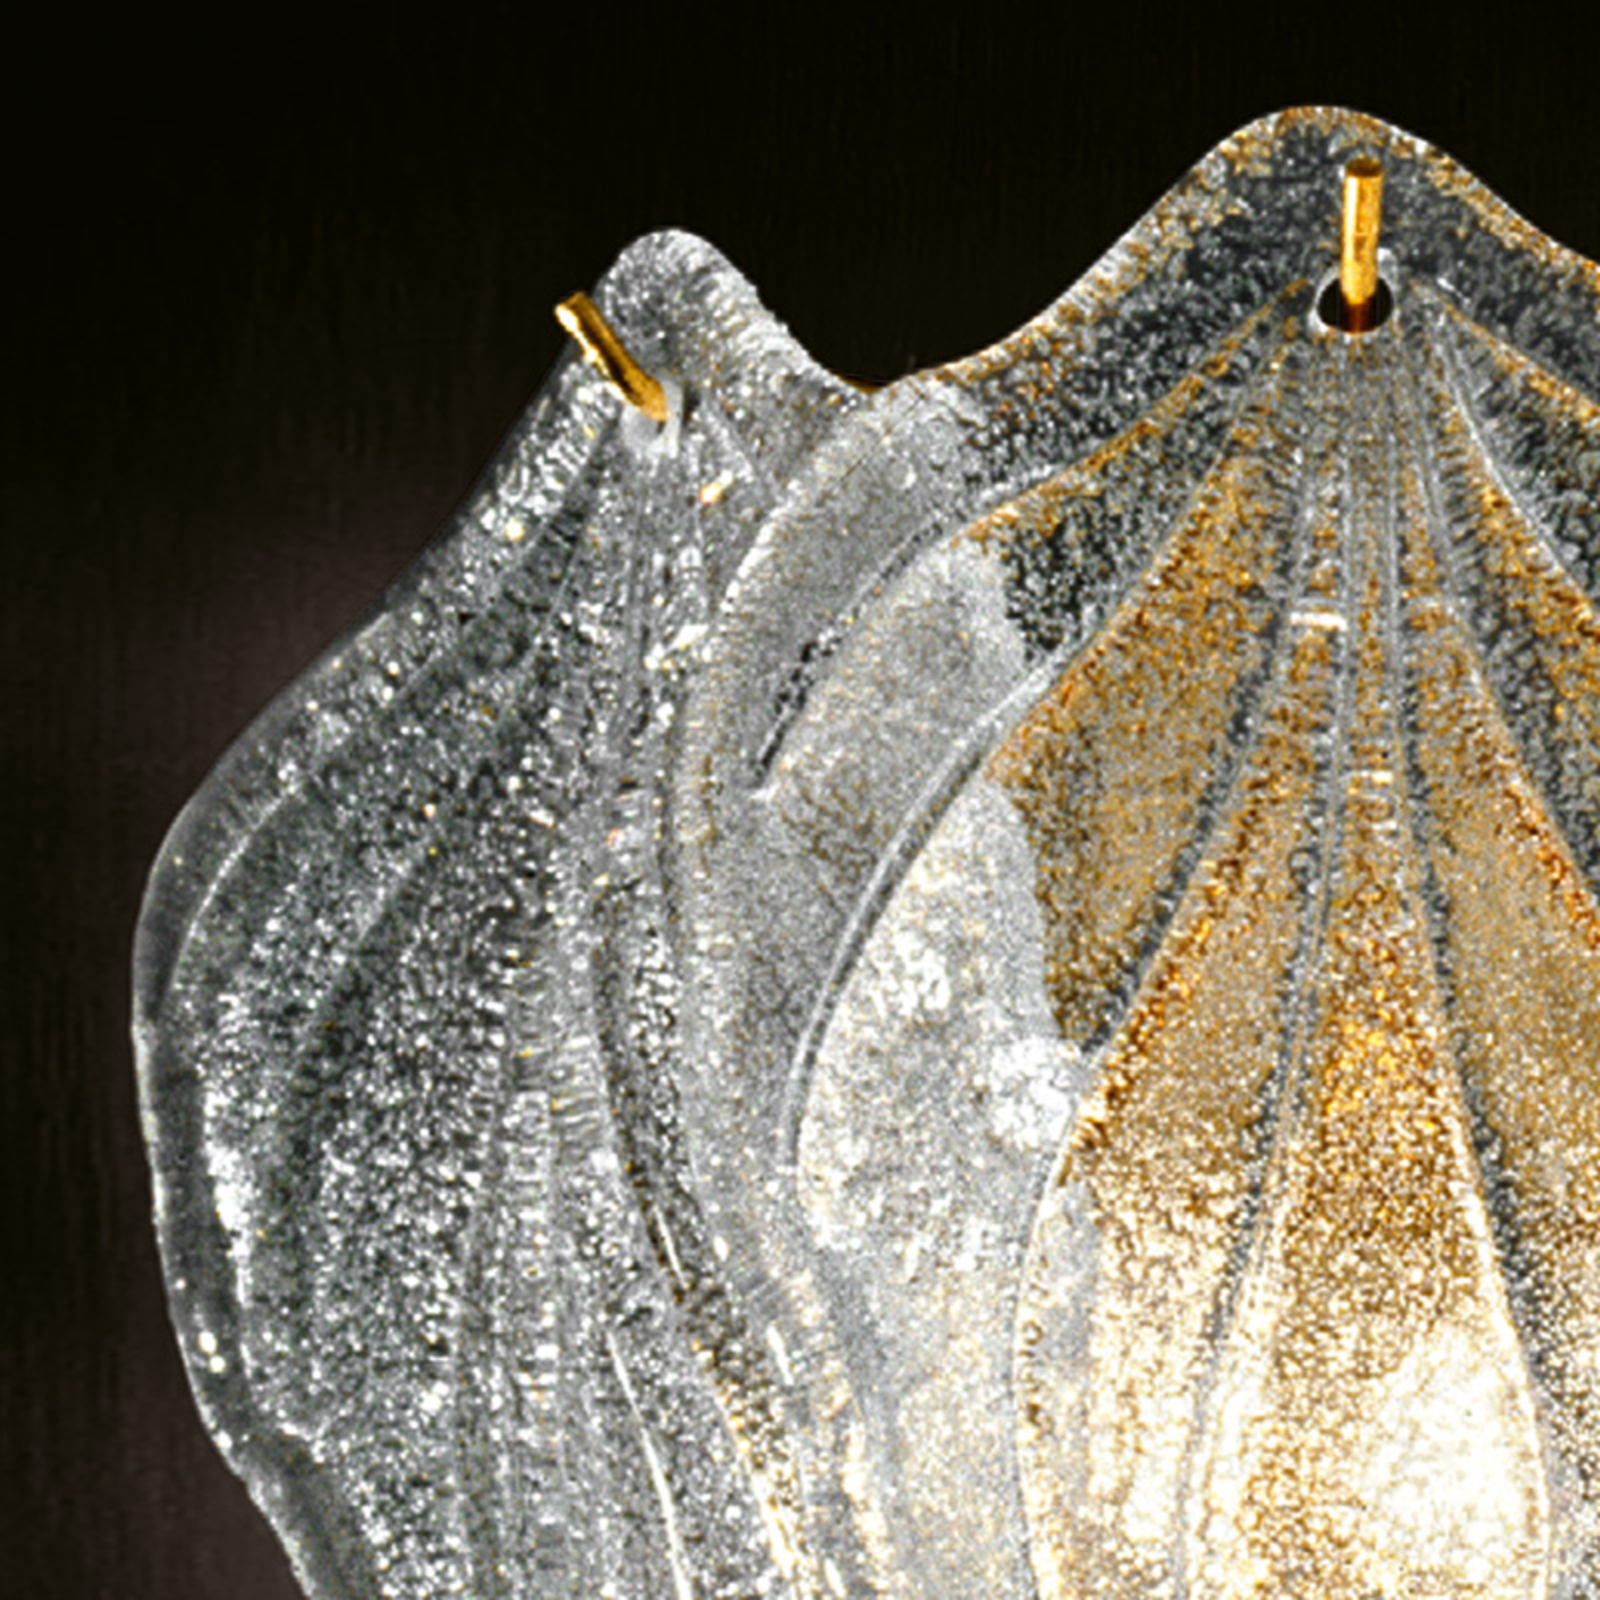 Üveg fali lámpa Foglie Murano-üvegből